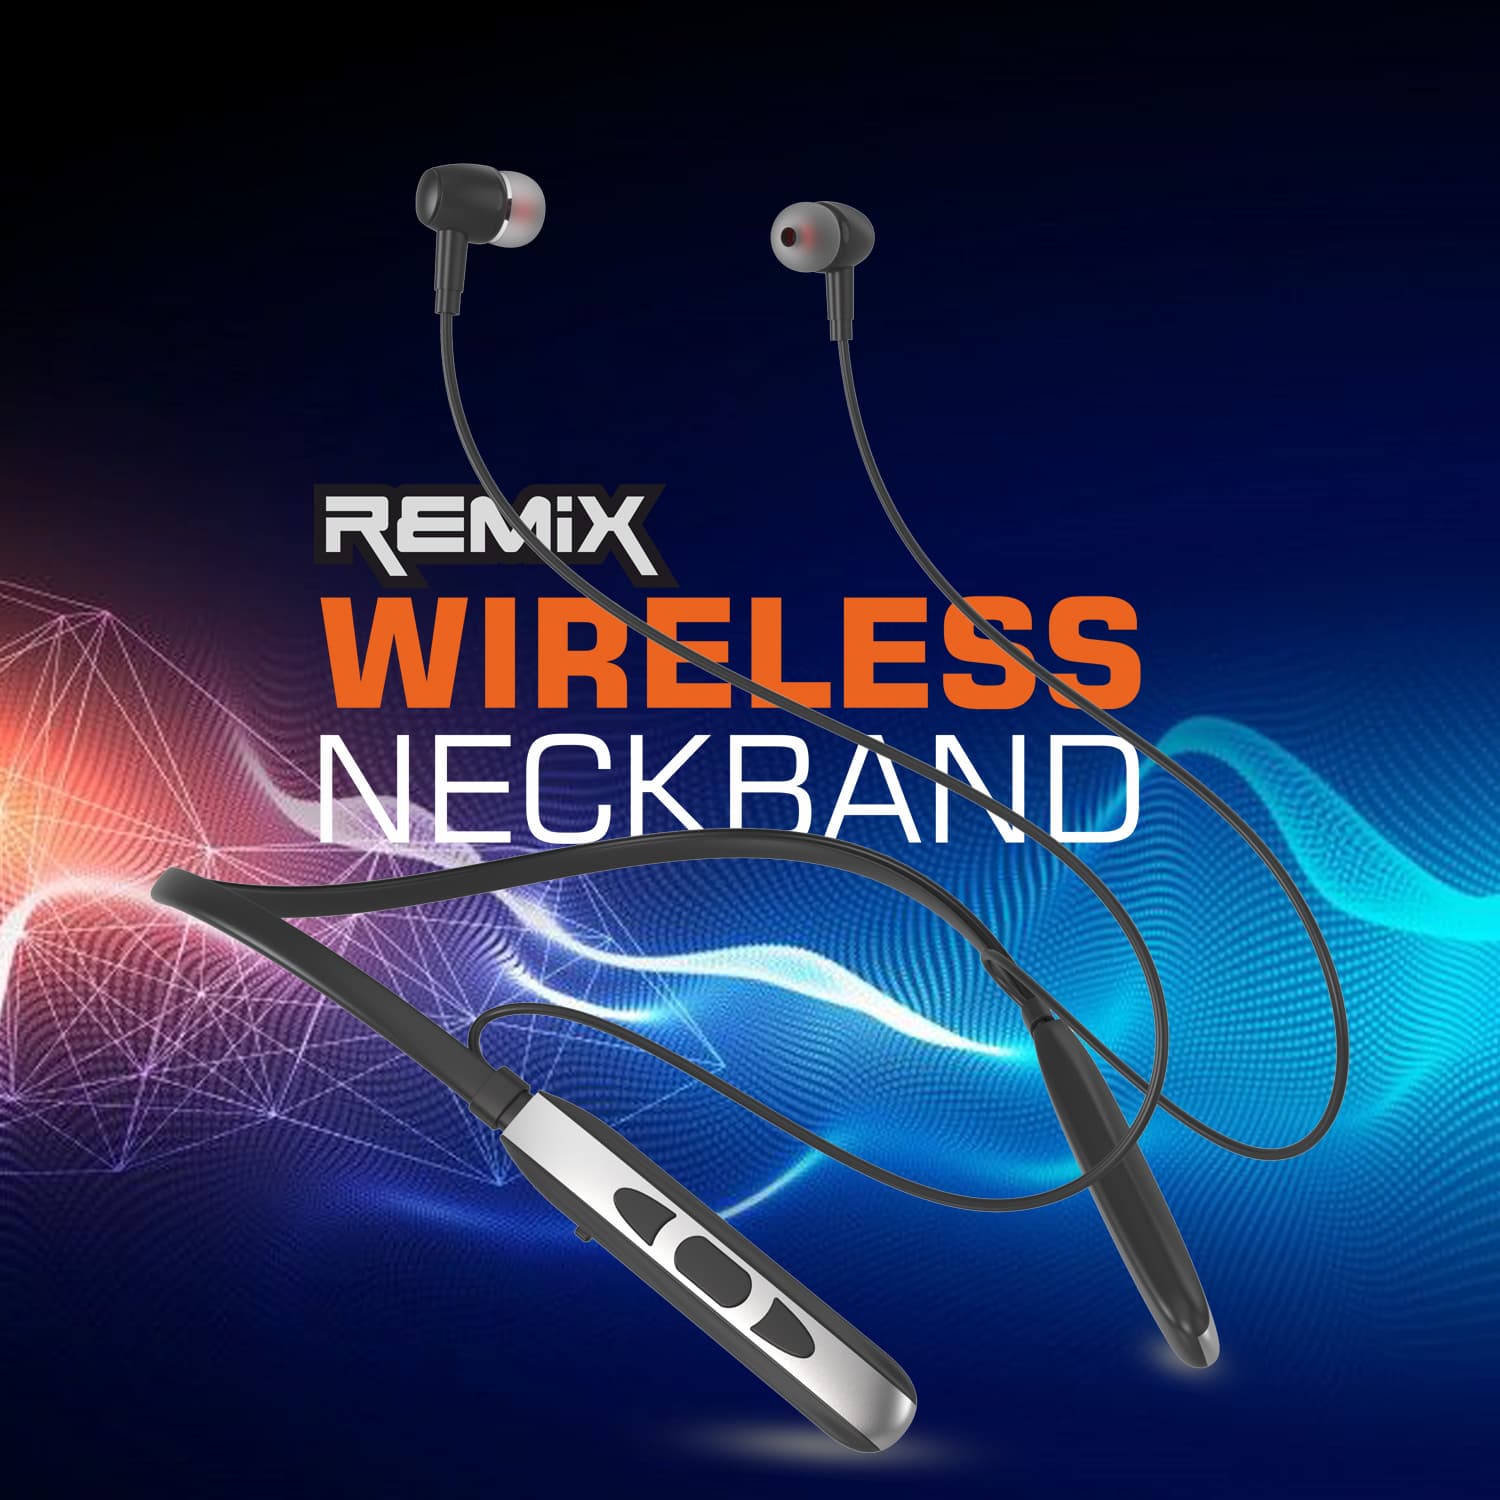 Unix Elite 5 Remix Wireless Neckband - Super Bass and Long Battery Life Black design